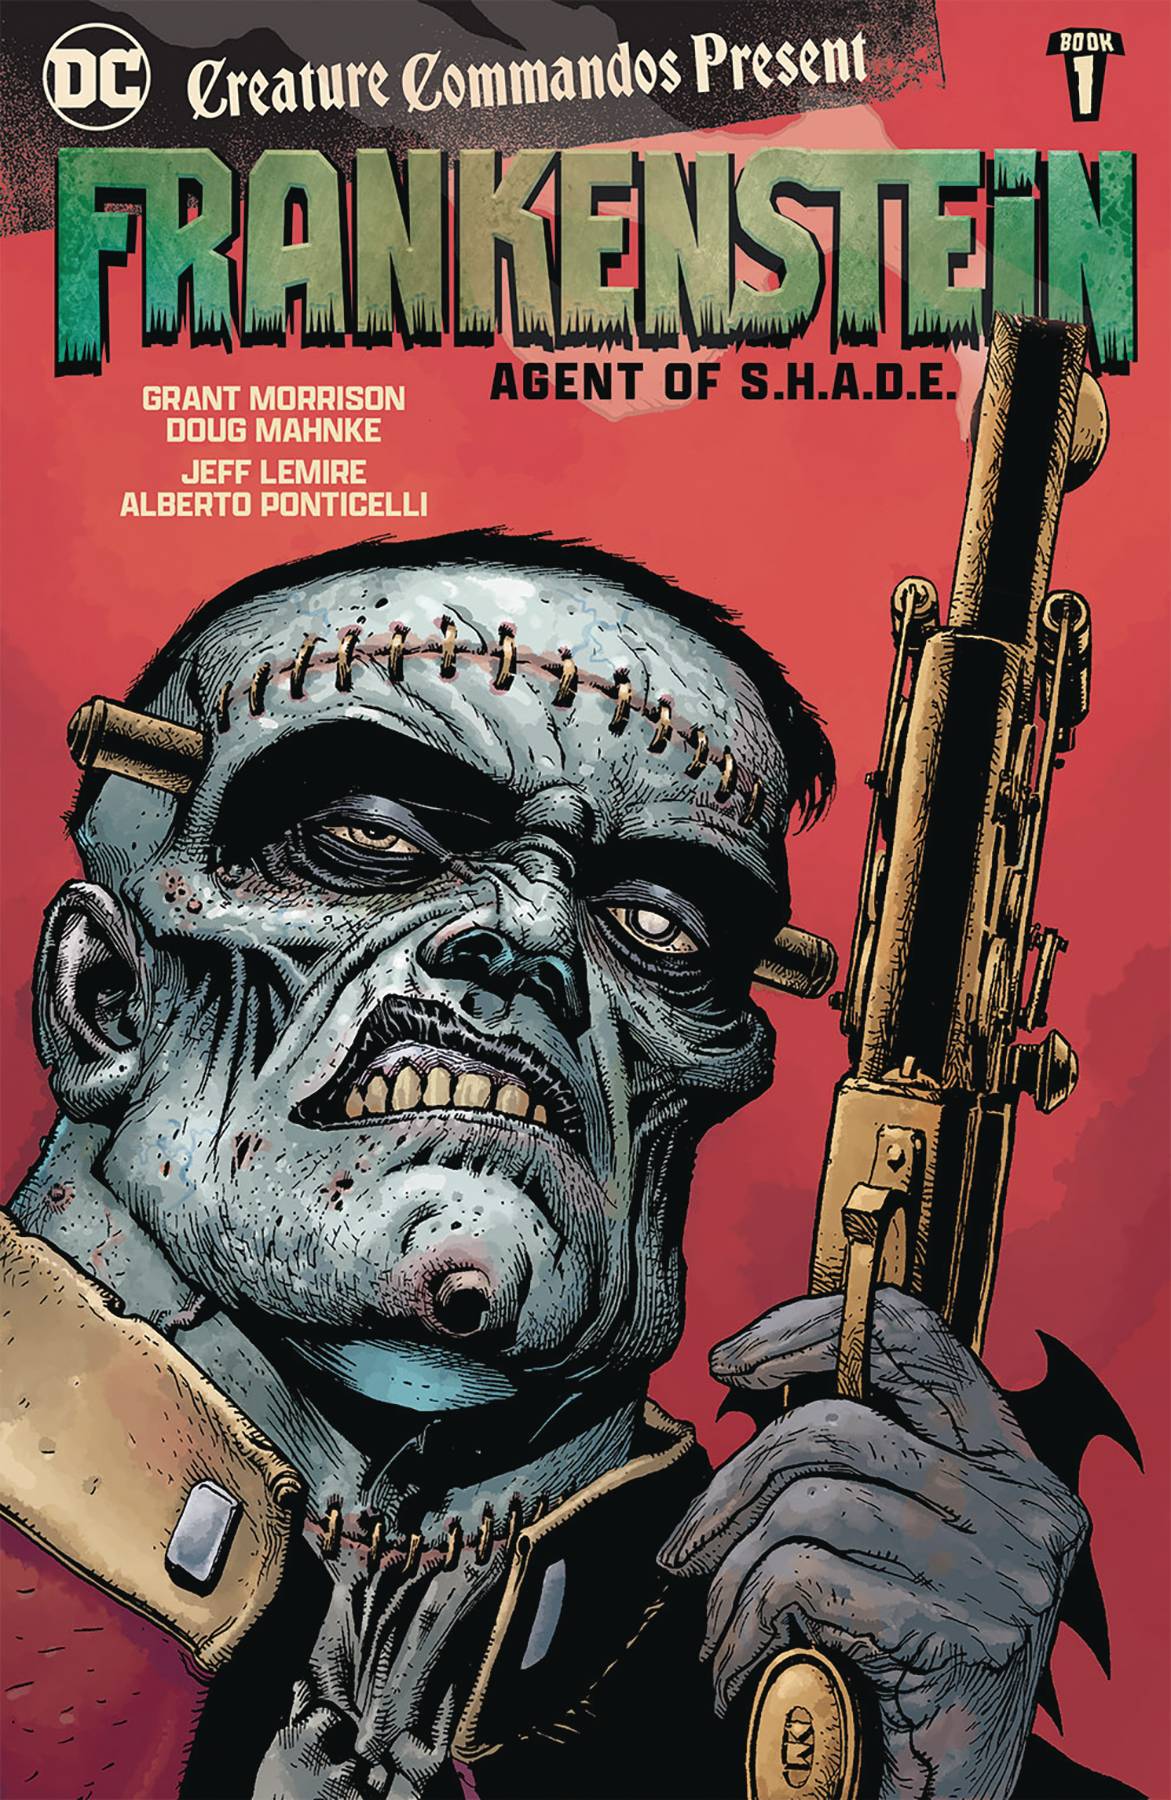 Commandos de créatures présents : Frankenstein, agent du tome XNUMX de SHADE | BD Cosmos